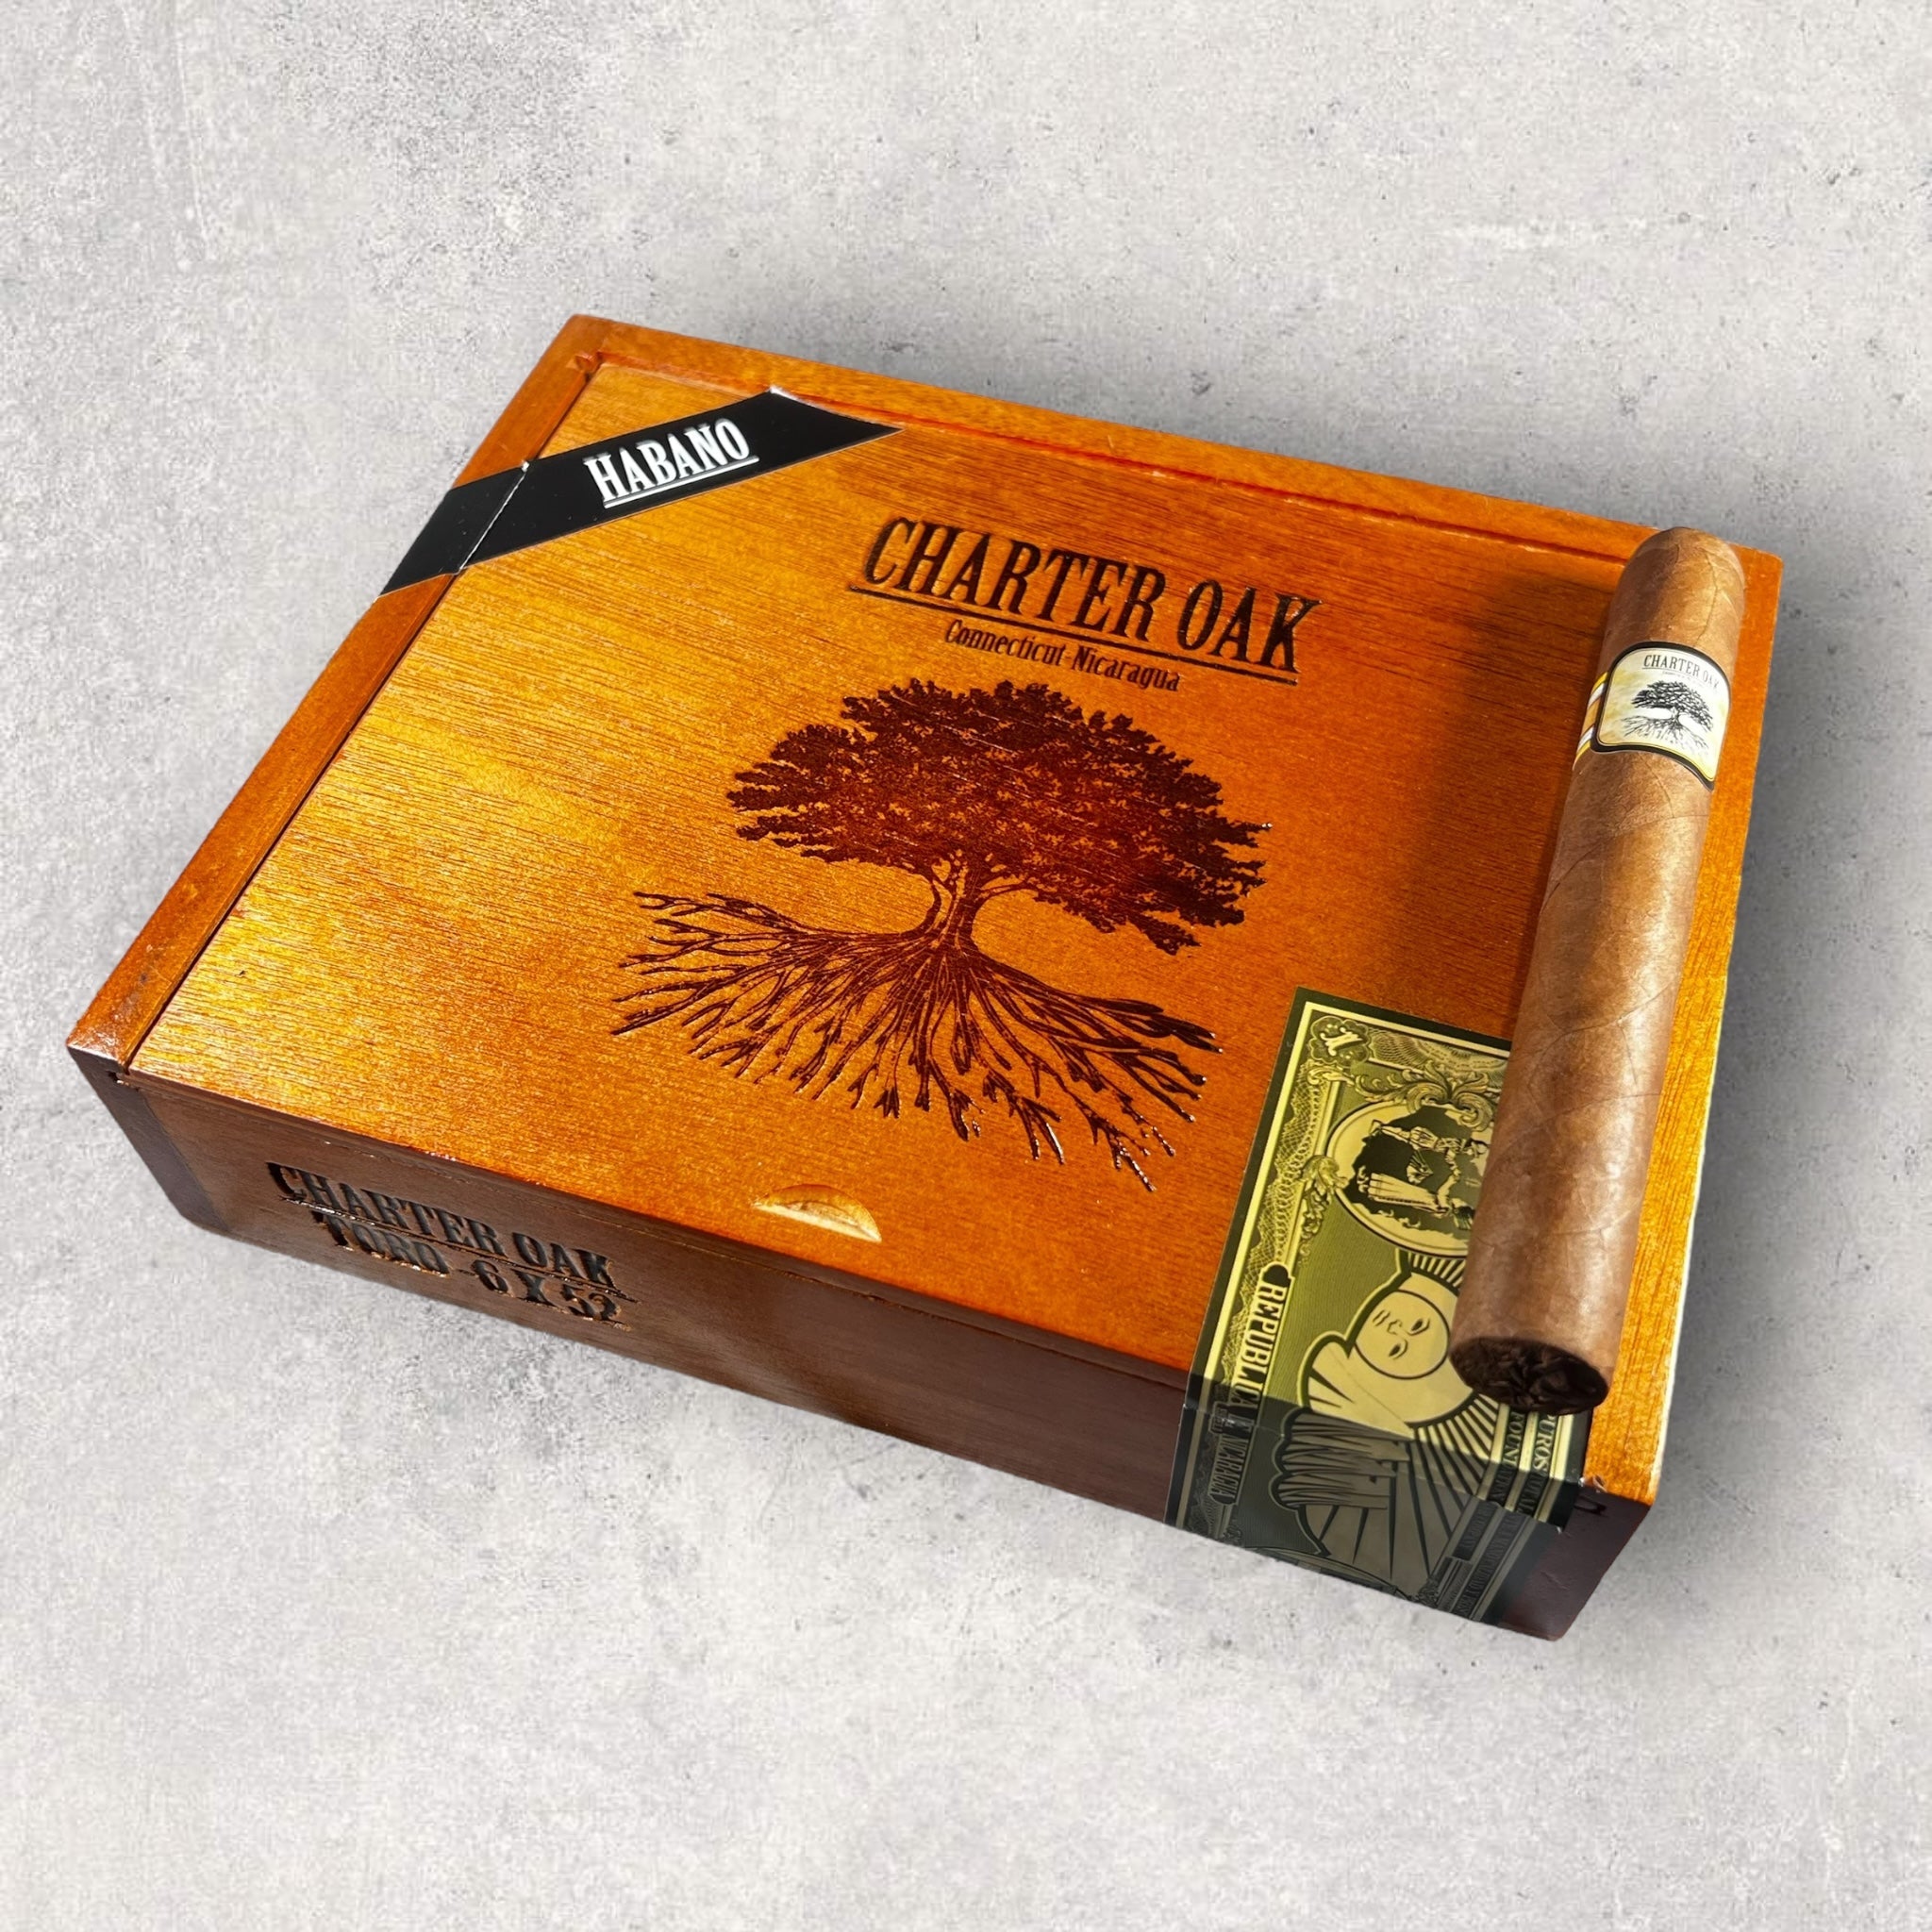 Foundation Charter Oak Habano Toro - Cigar 30